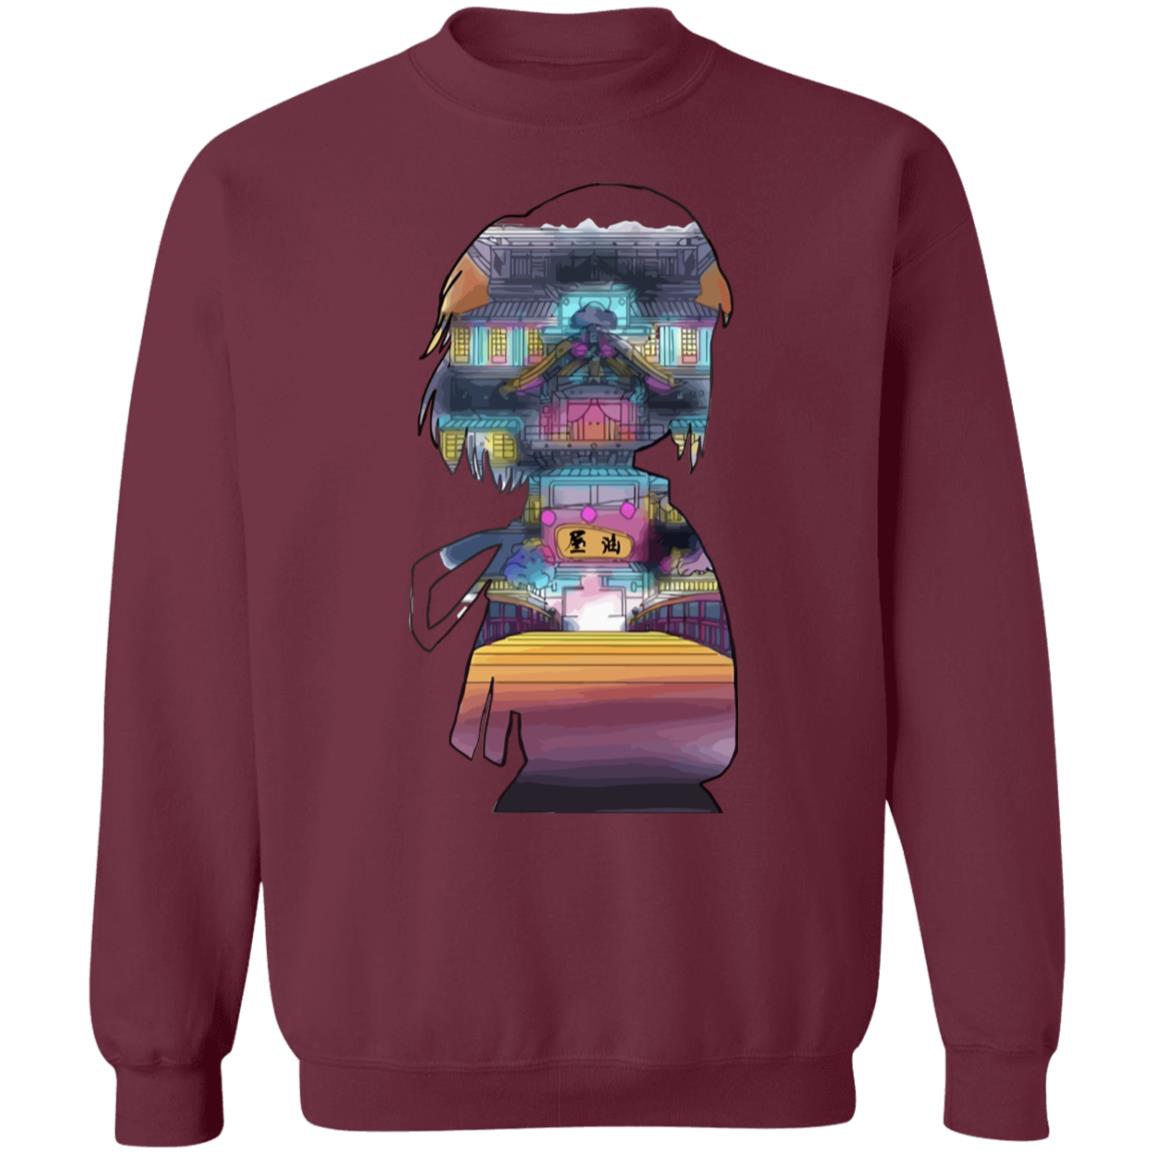 Spirited Away – Sen and The Bathhouse Cutout Colorful Sweatshirt